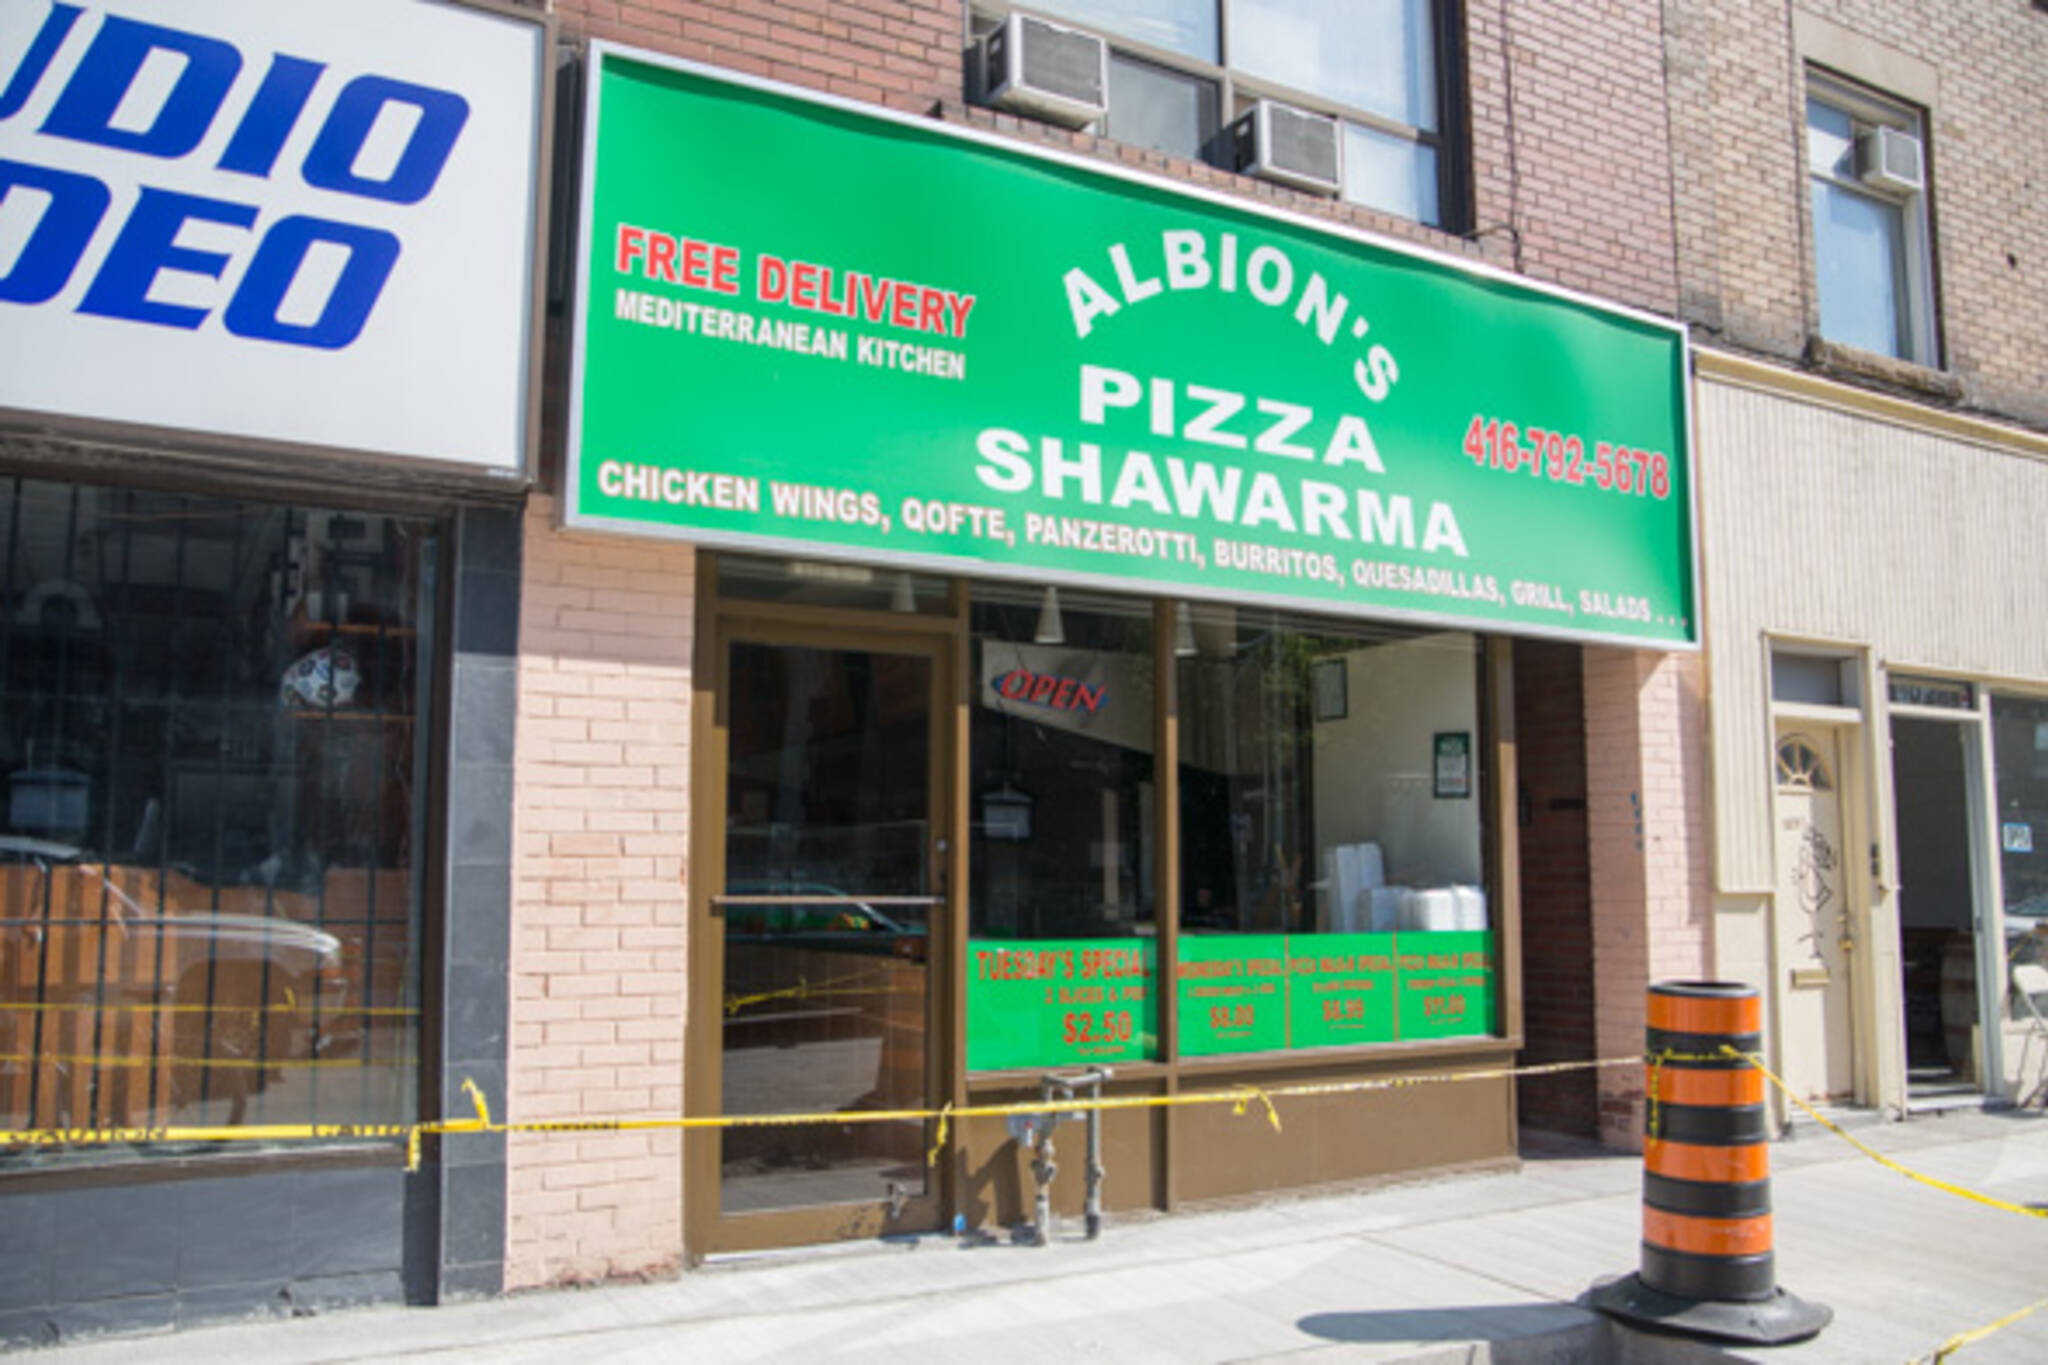 albion's pizza shawarma toronto